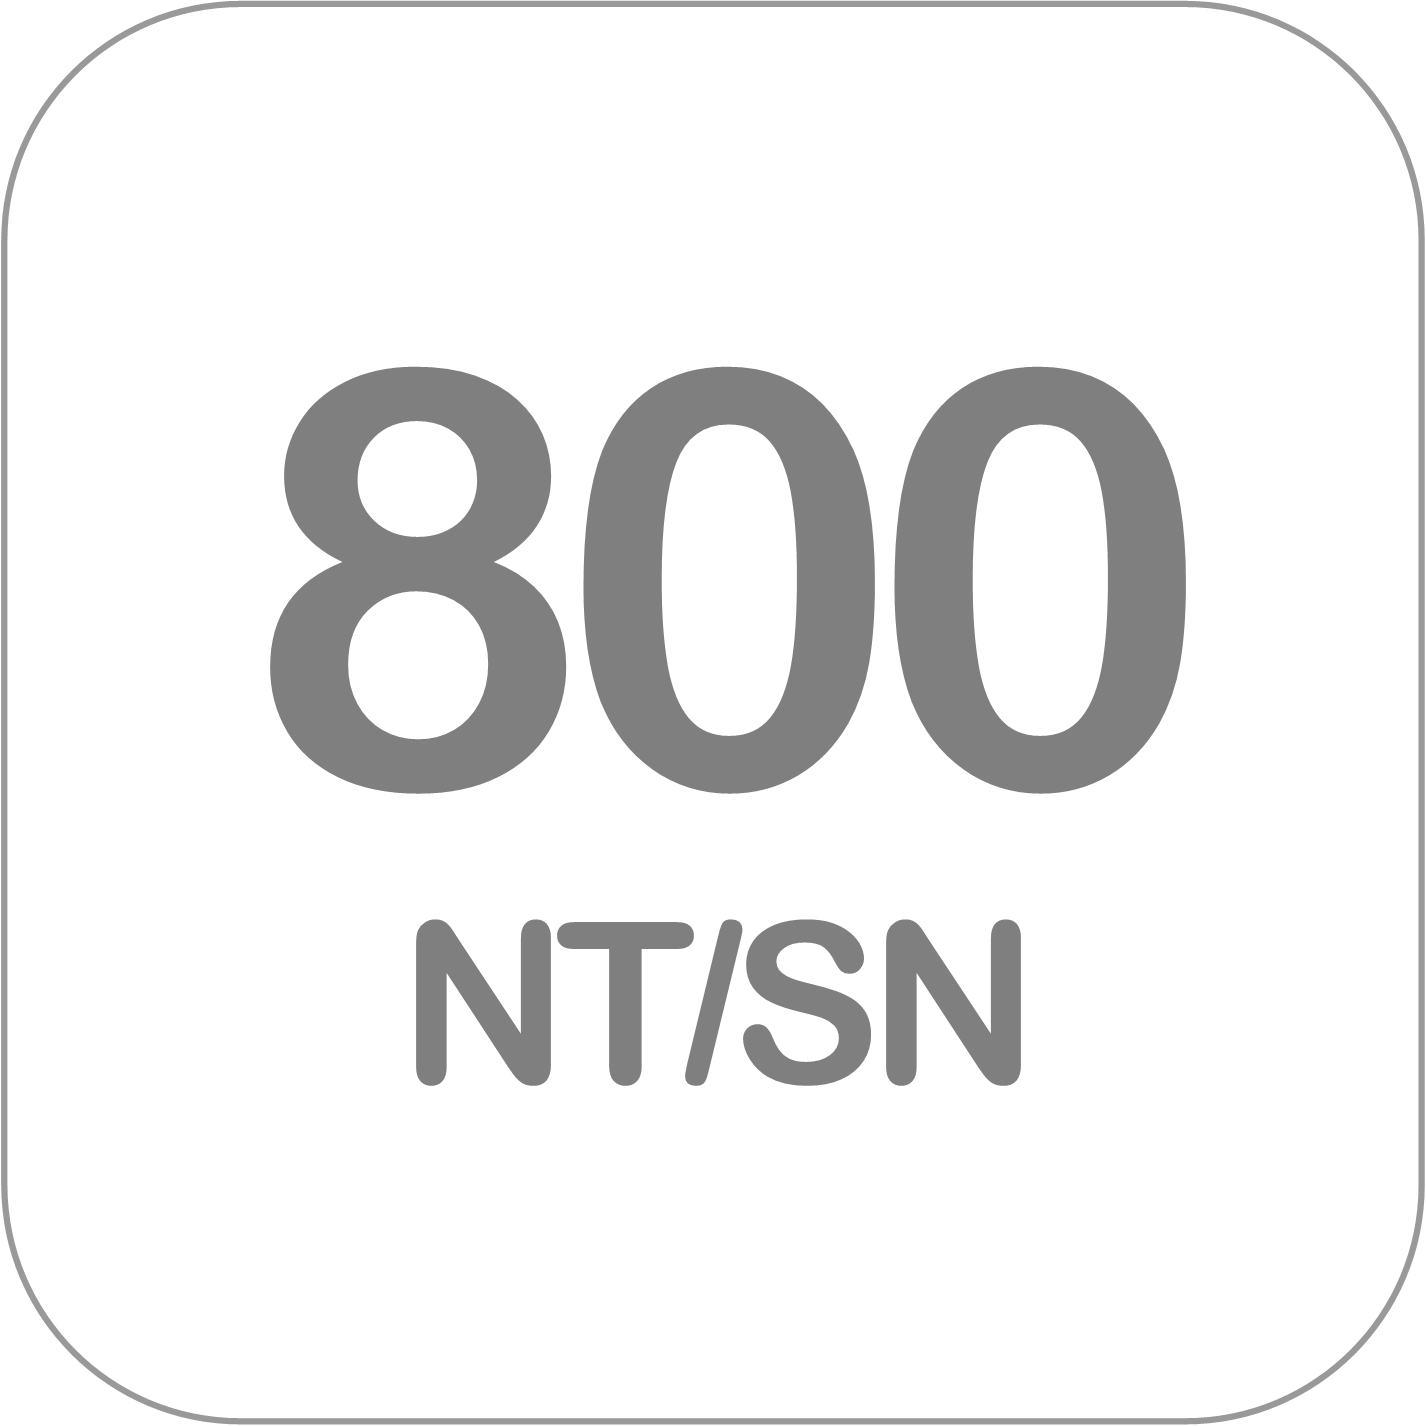 Volquete 800 NT/SN